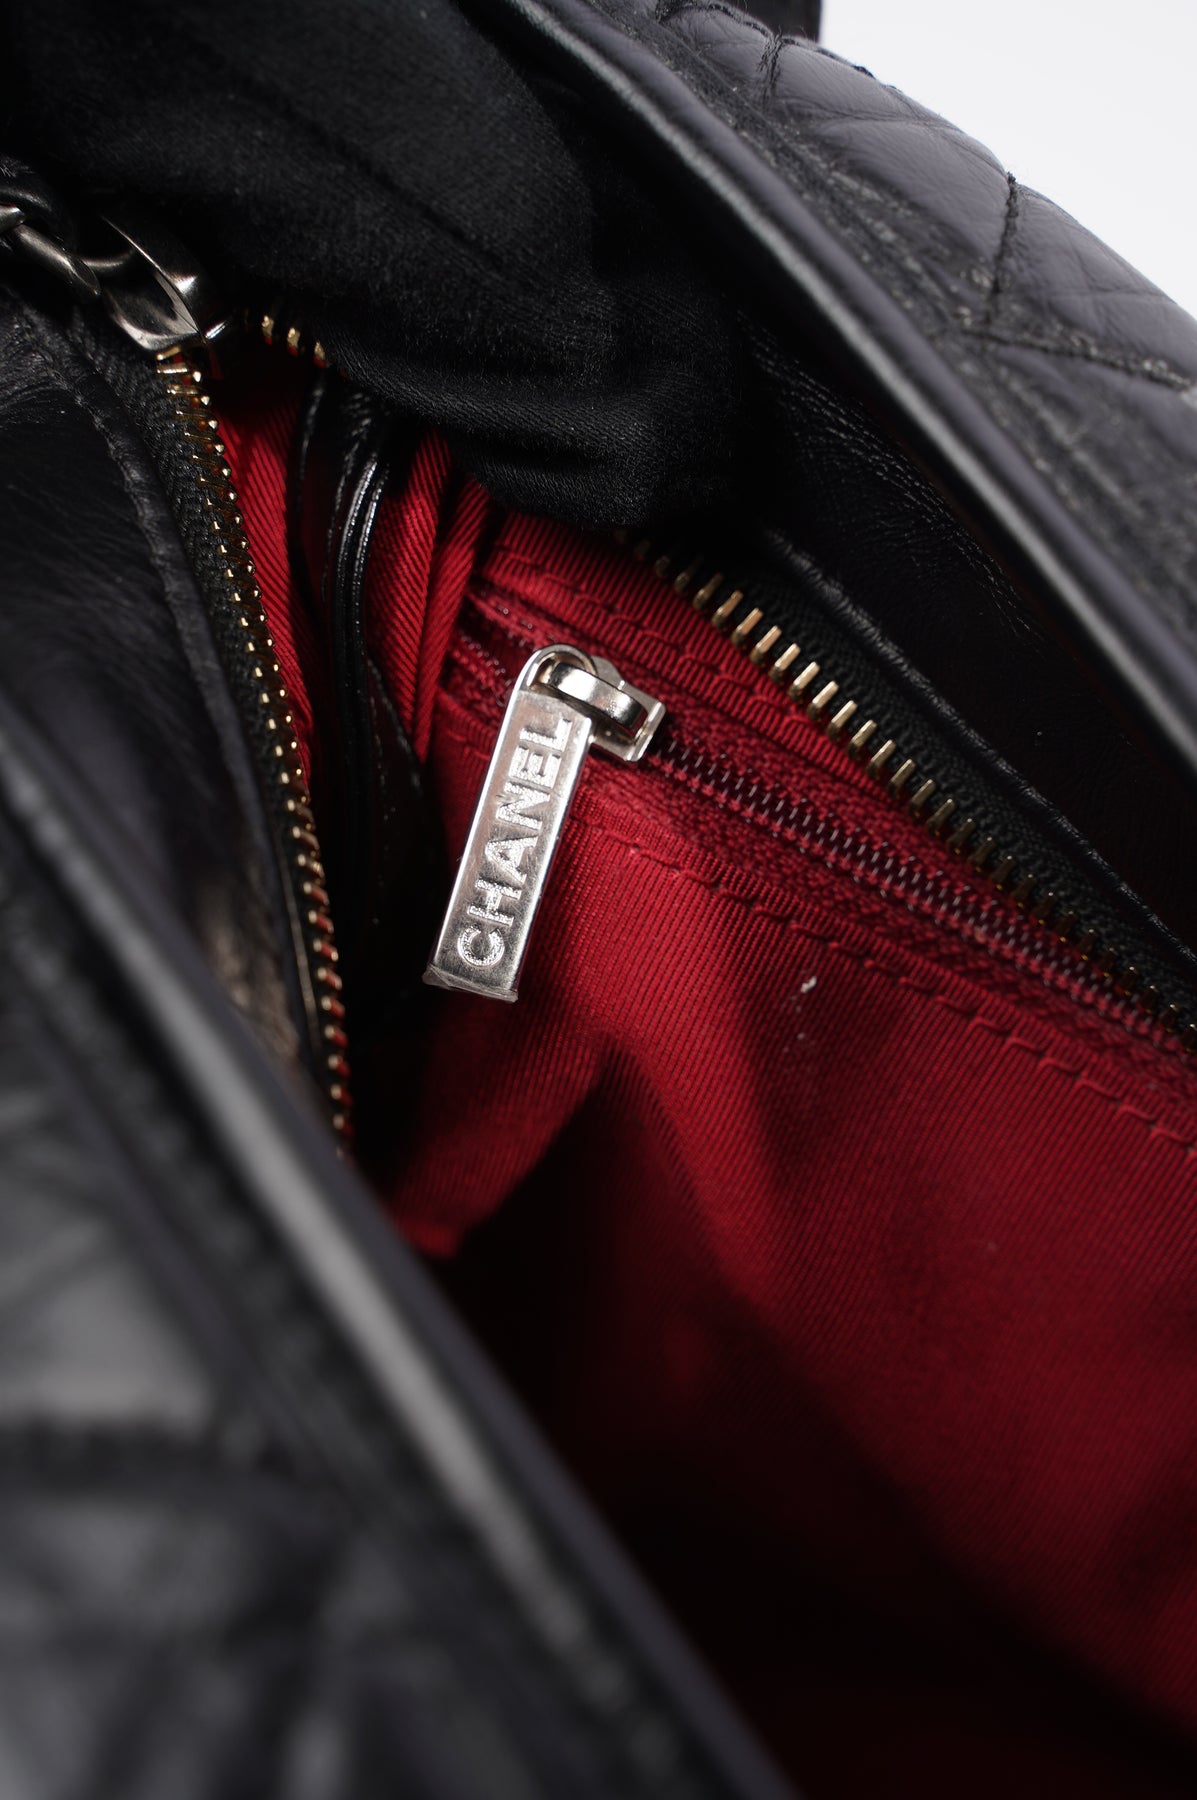 CHANEL Gabrielle de Chanel Large Hobo Bag Shoulder Leather Nevy A93824  90204191